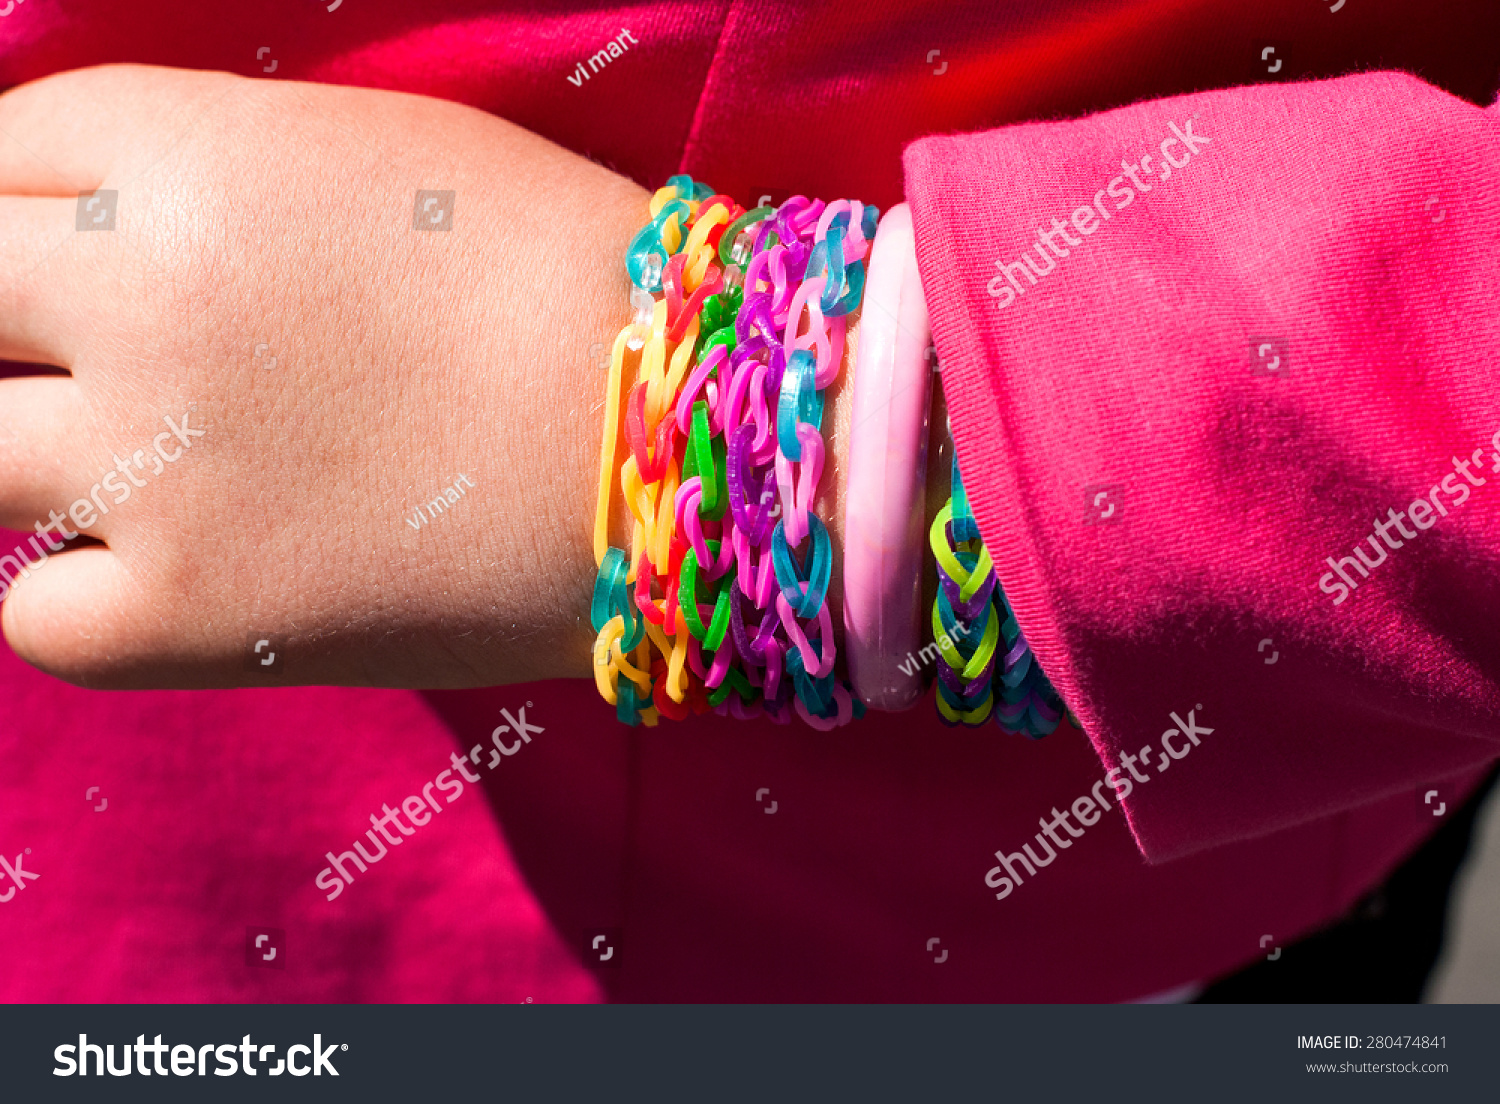 bright colored bracelets